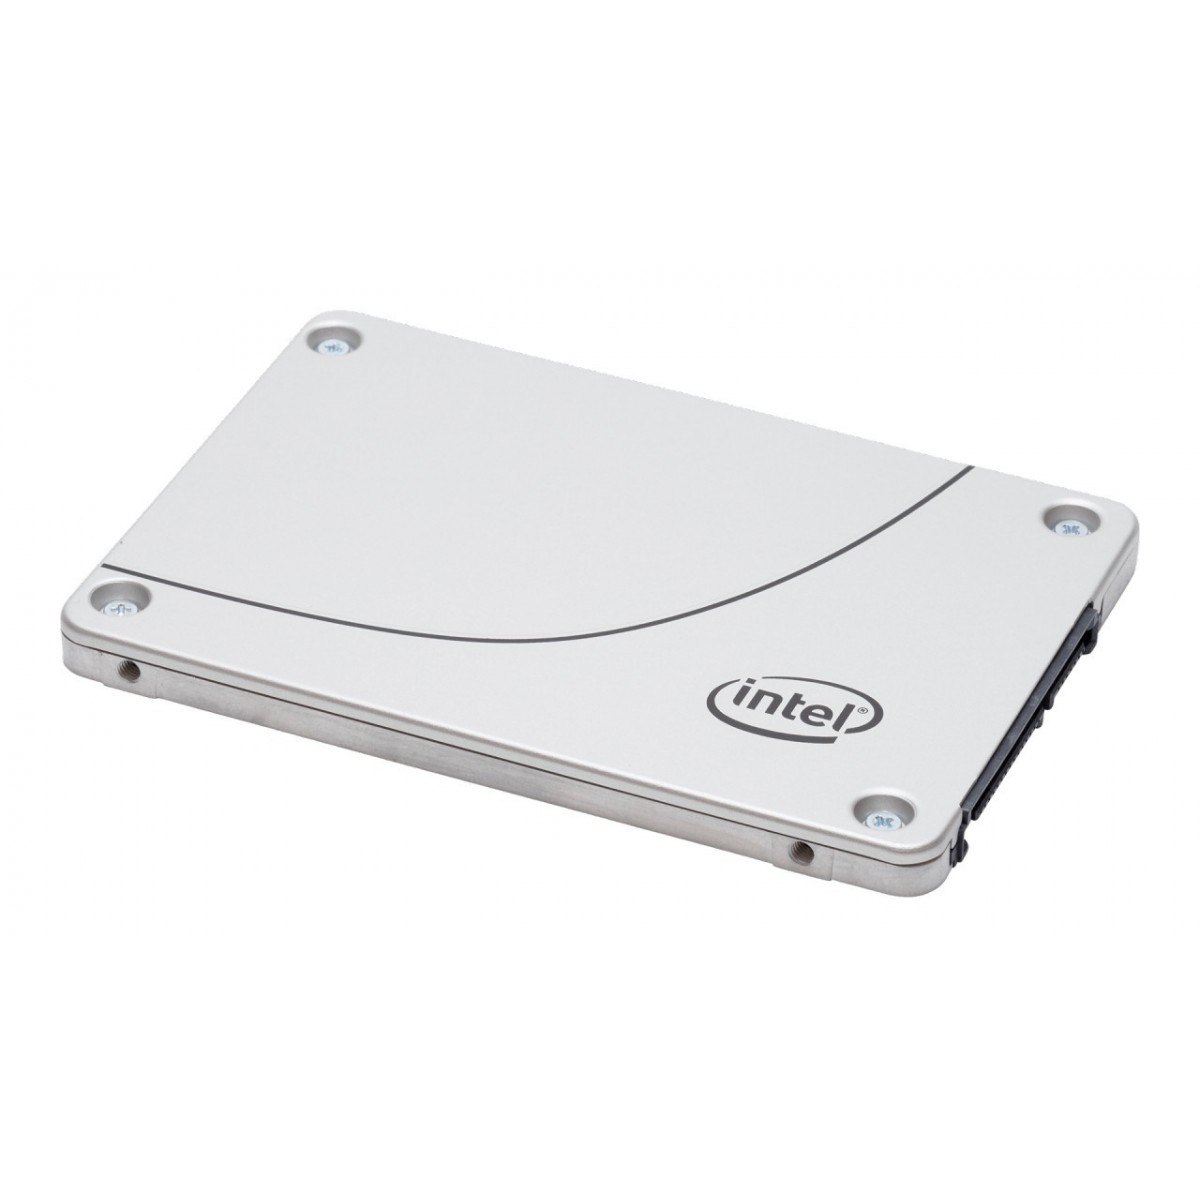 Intel DC S4600 - 960 GB - 2.5 - 500 MB/s - 6 Gbit/s